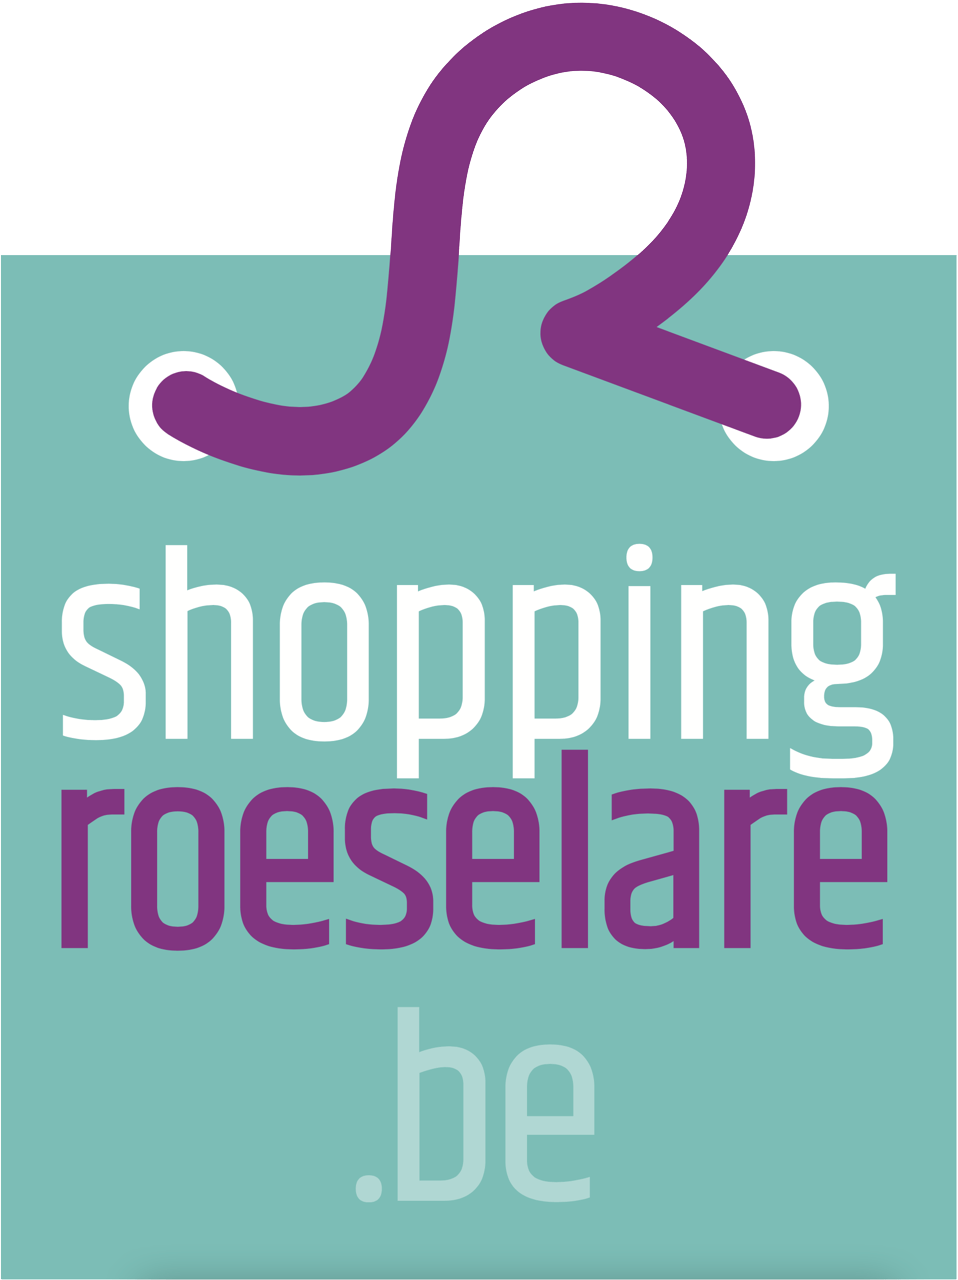 Shopping Roeselare logo